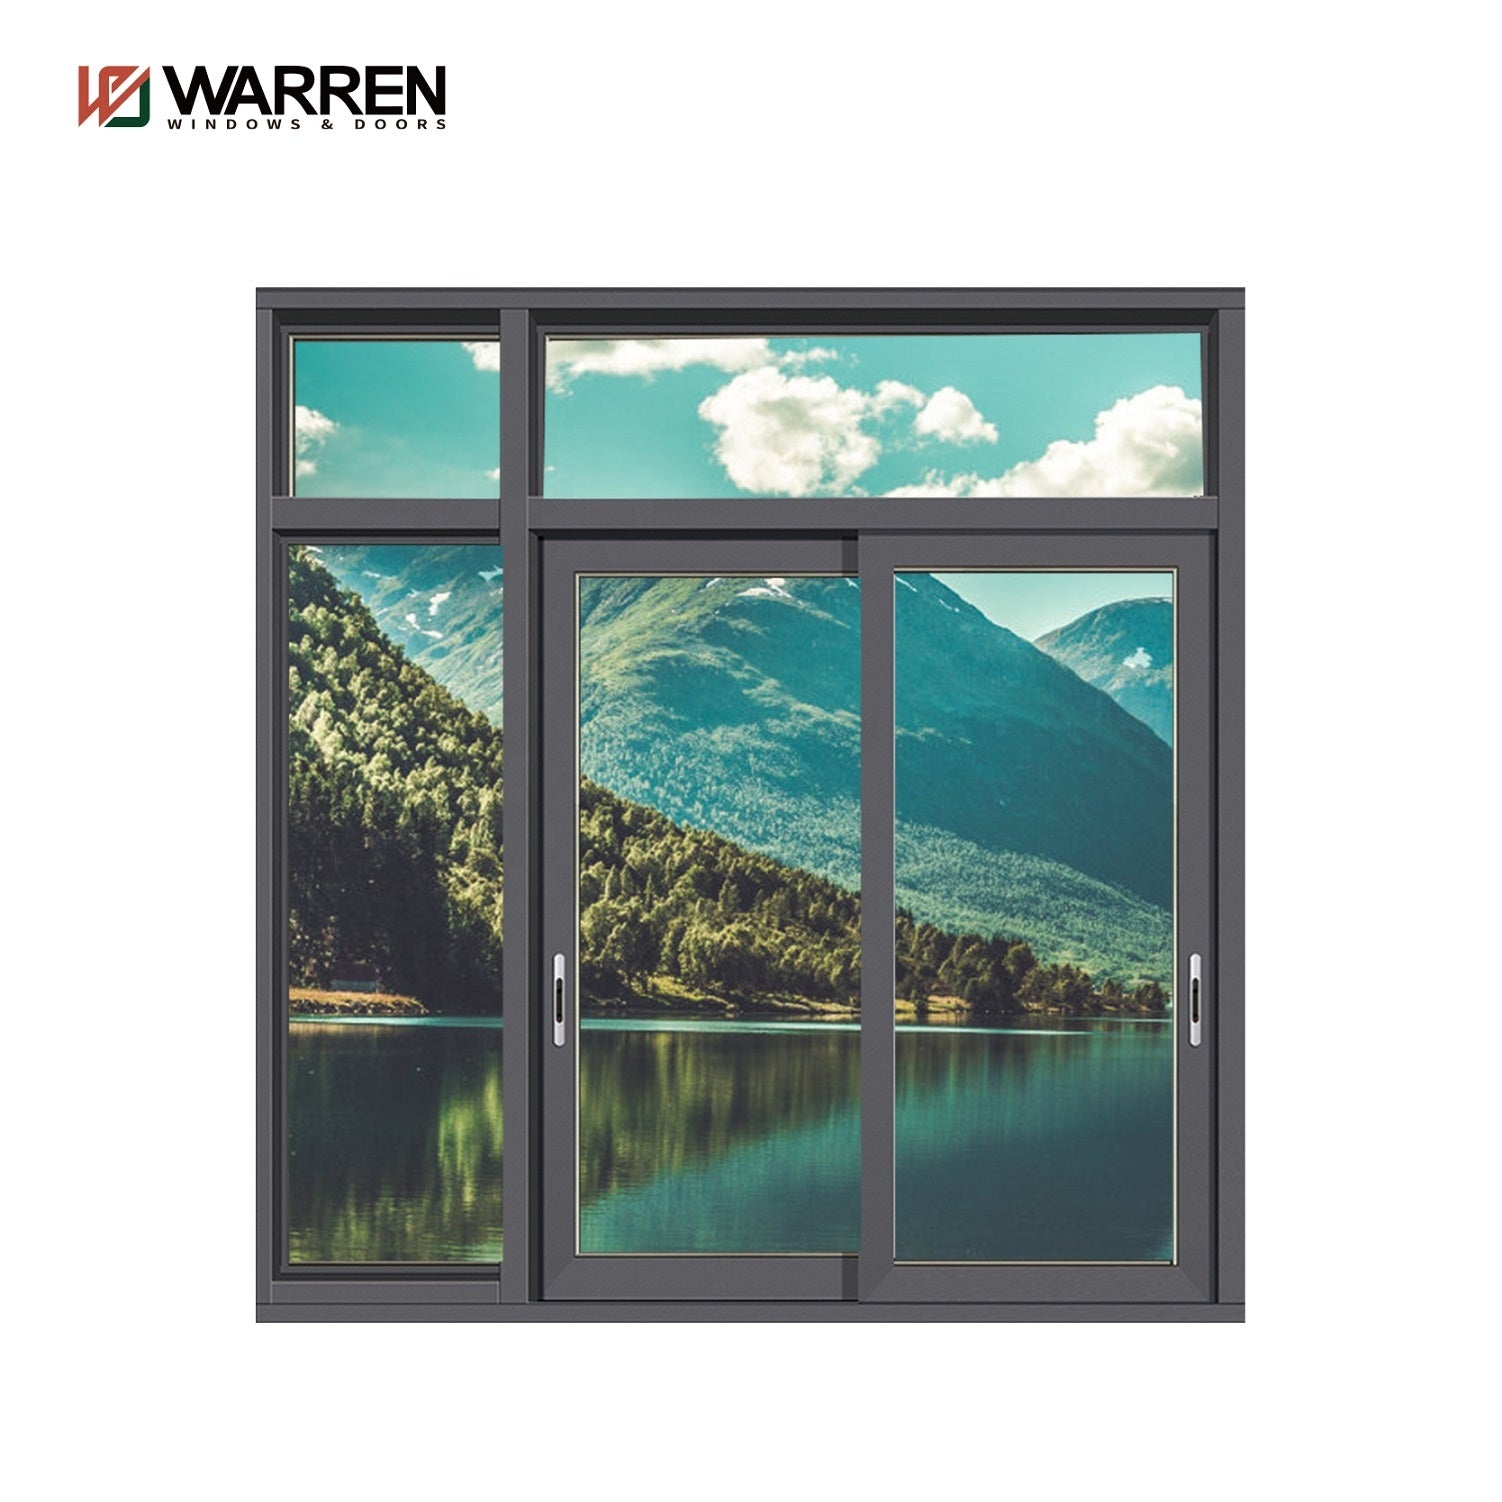 Warren Factory outlet aluminum sliding window frame exterior black patio garden large double glazed soundproof sliding window